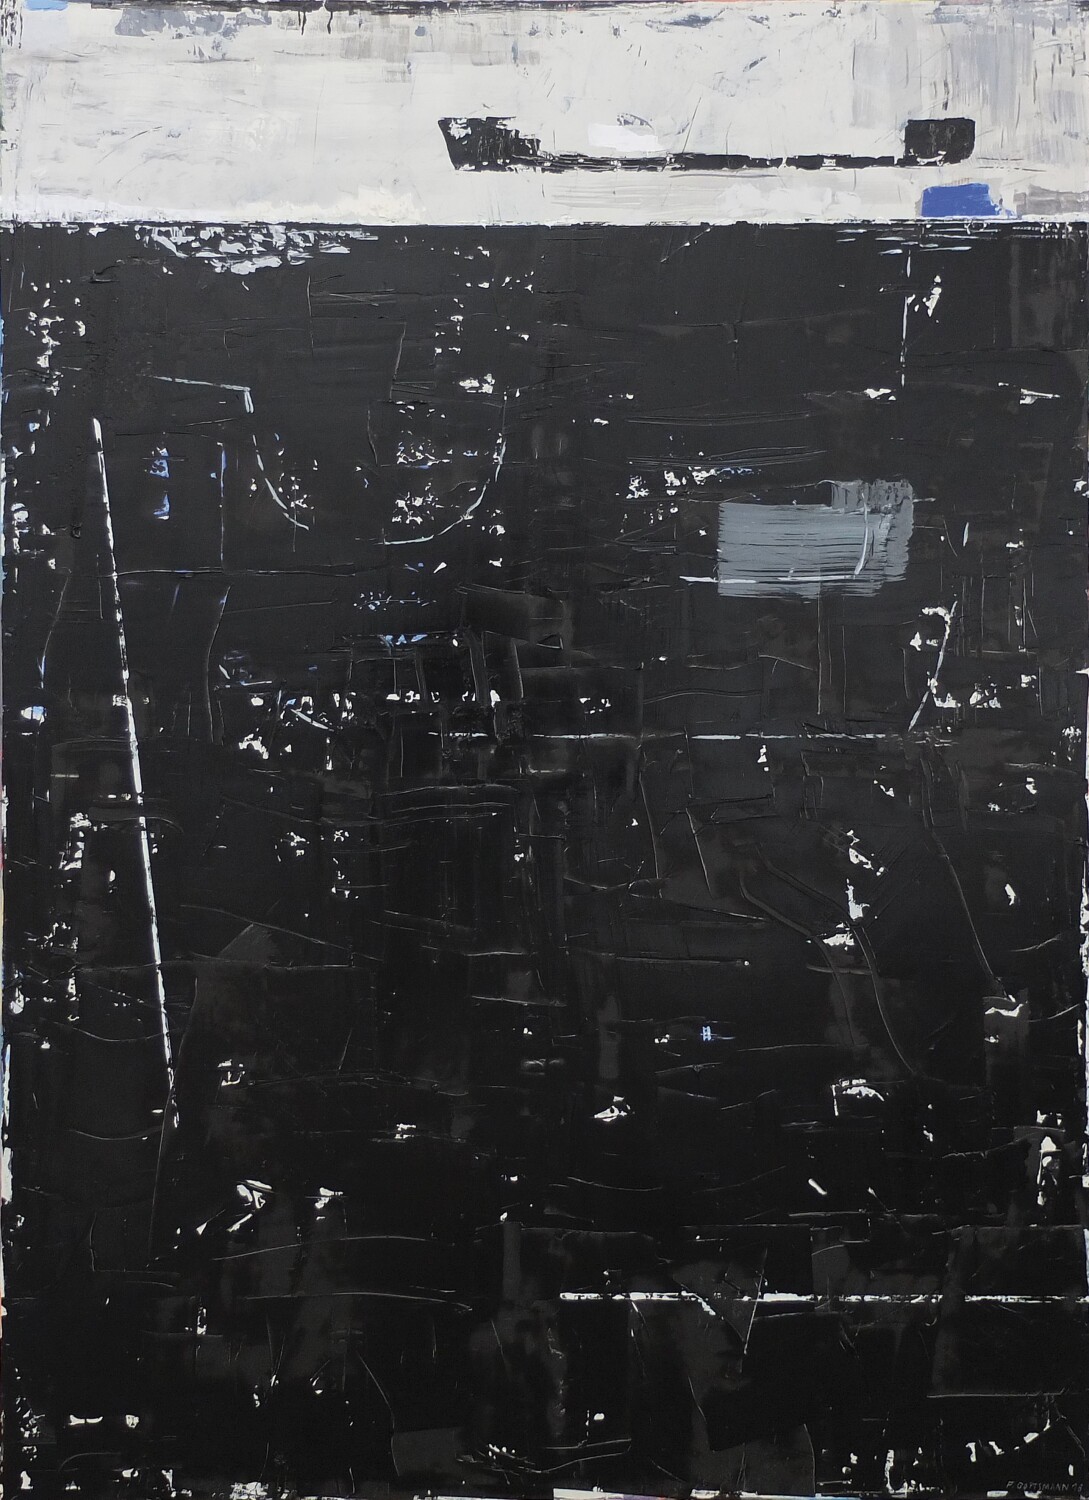 Frank Gottsmann, Nördlich, 2016, Öl auf Leinwand, 160 x 120 cm